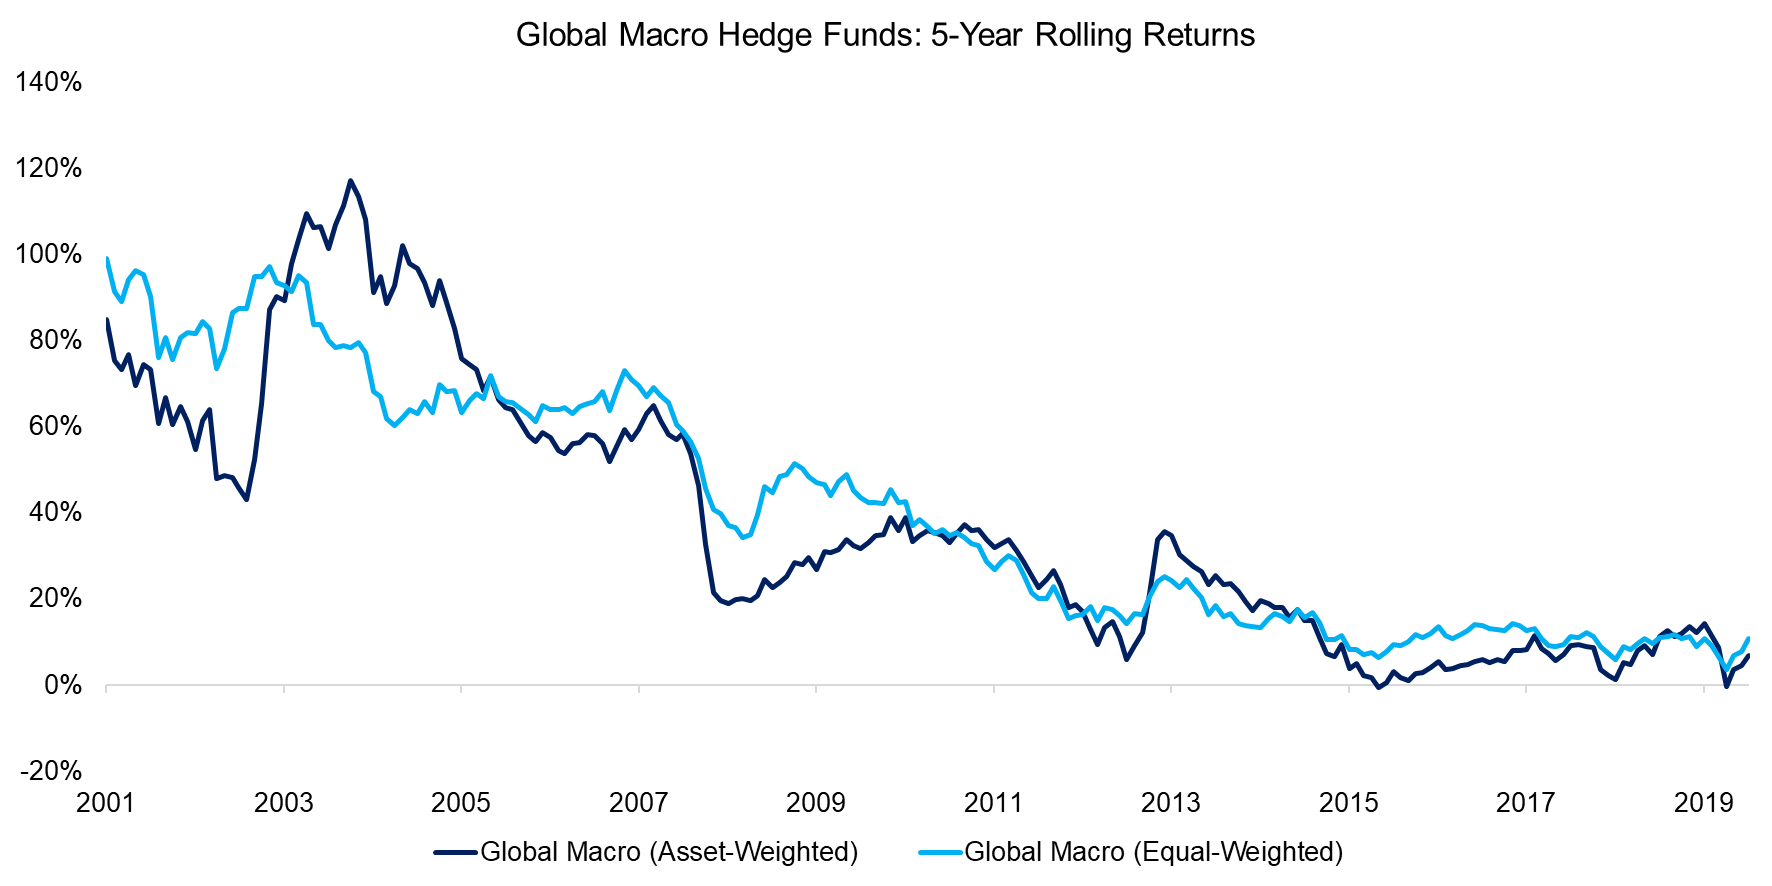 Global Macro Hedge Funds 5-Year Rolling Returns